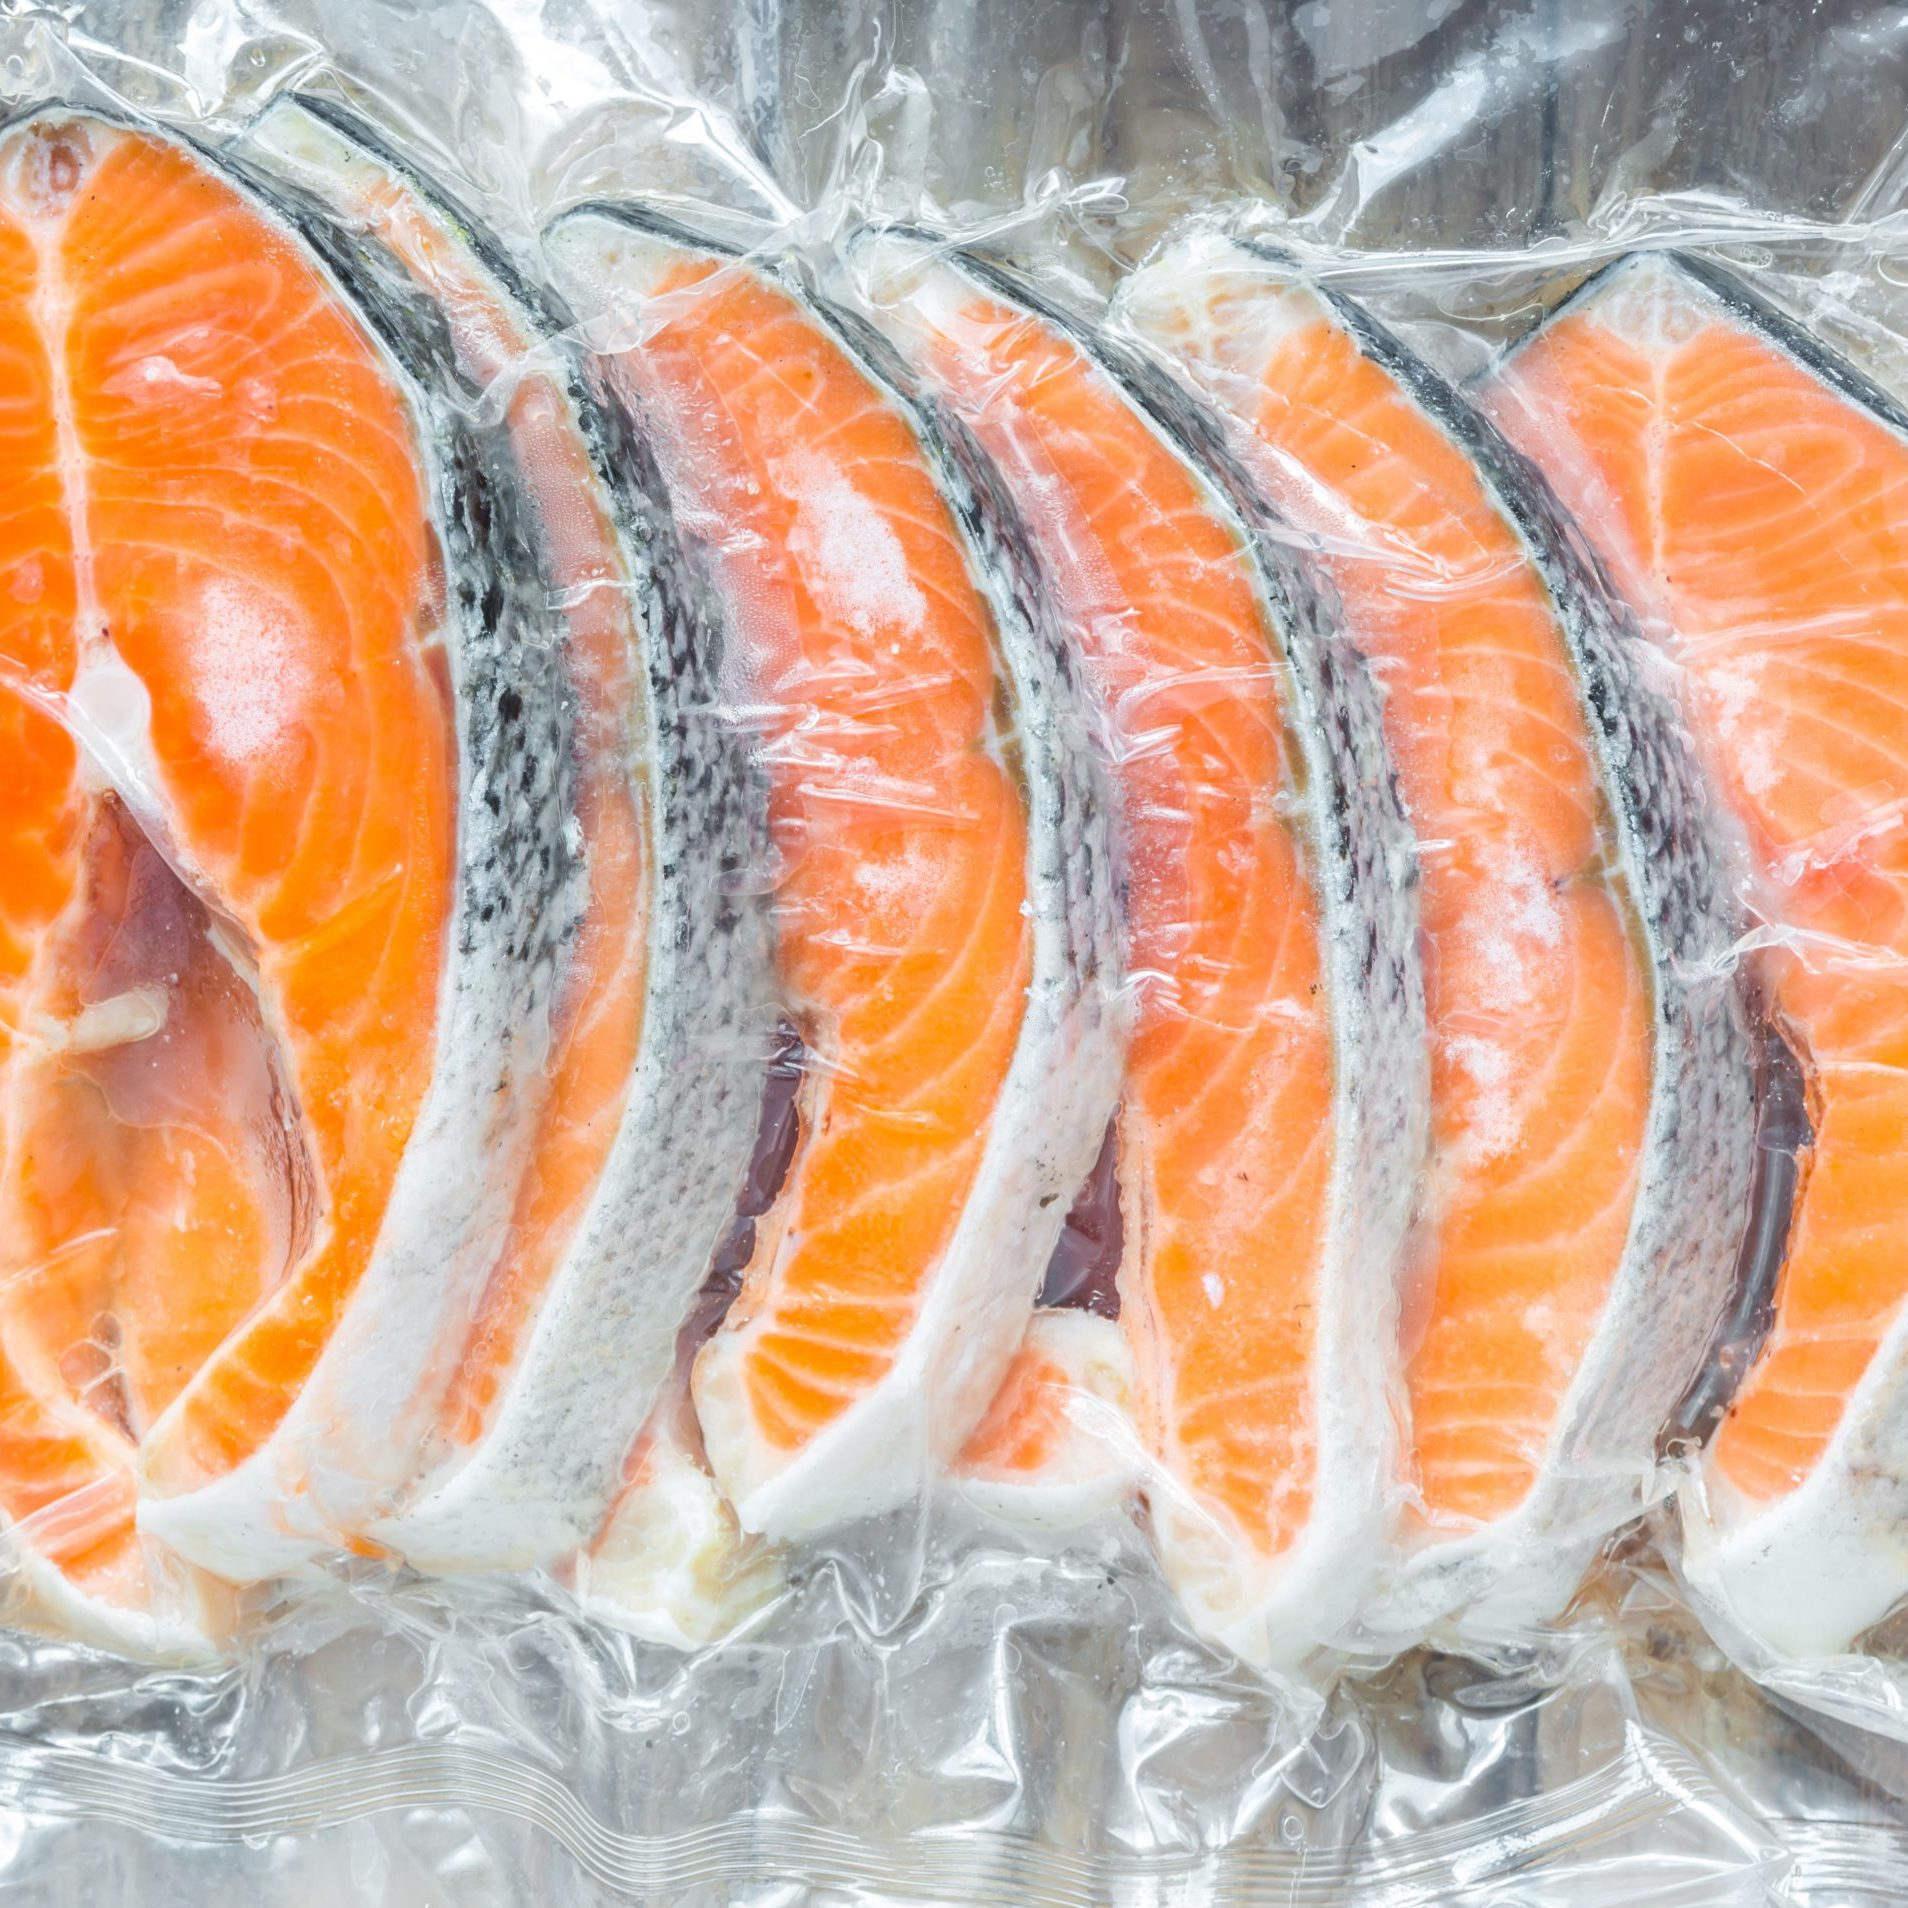 Frozen salmon fillets in a vacuum package